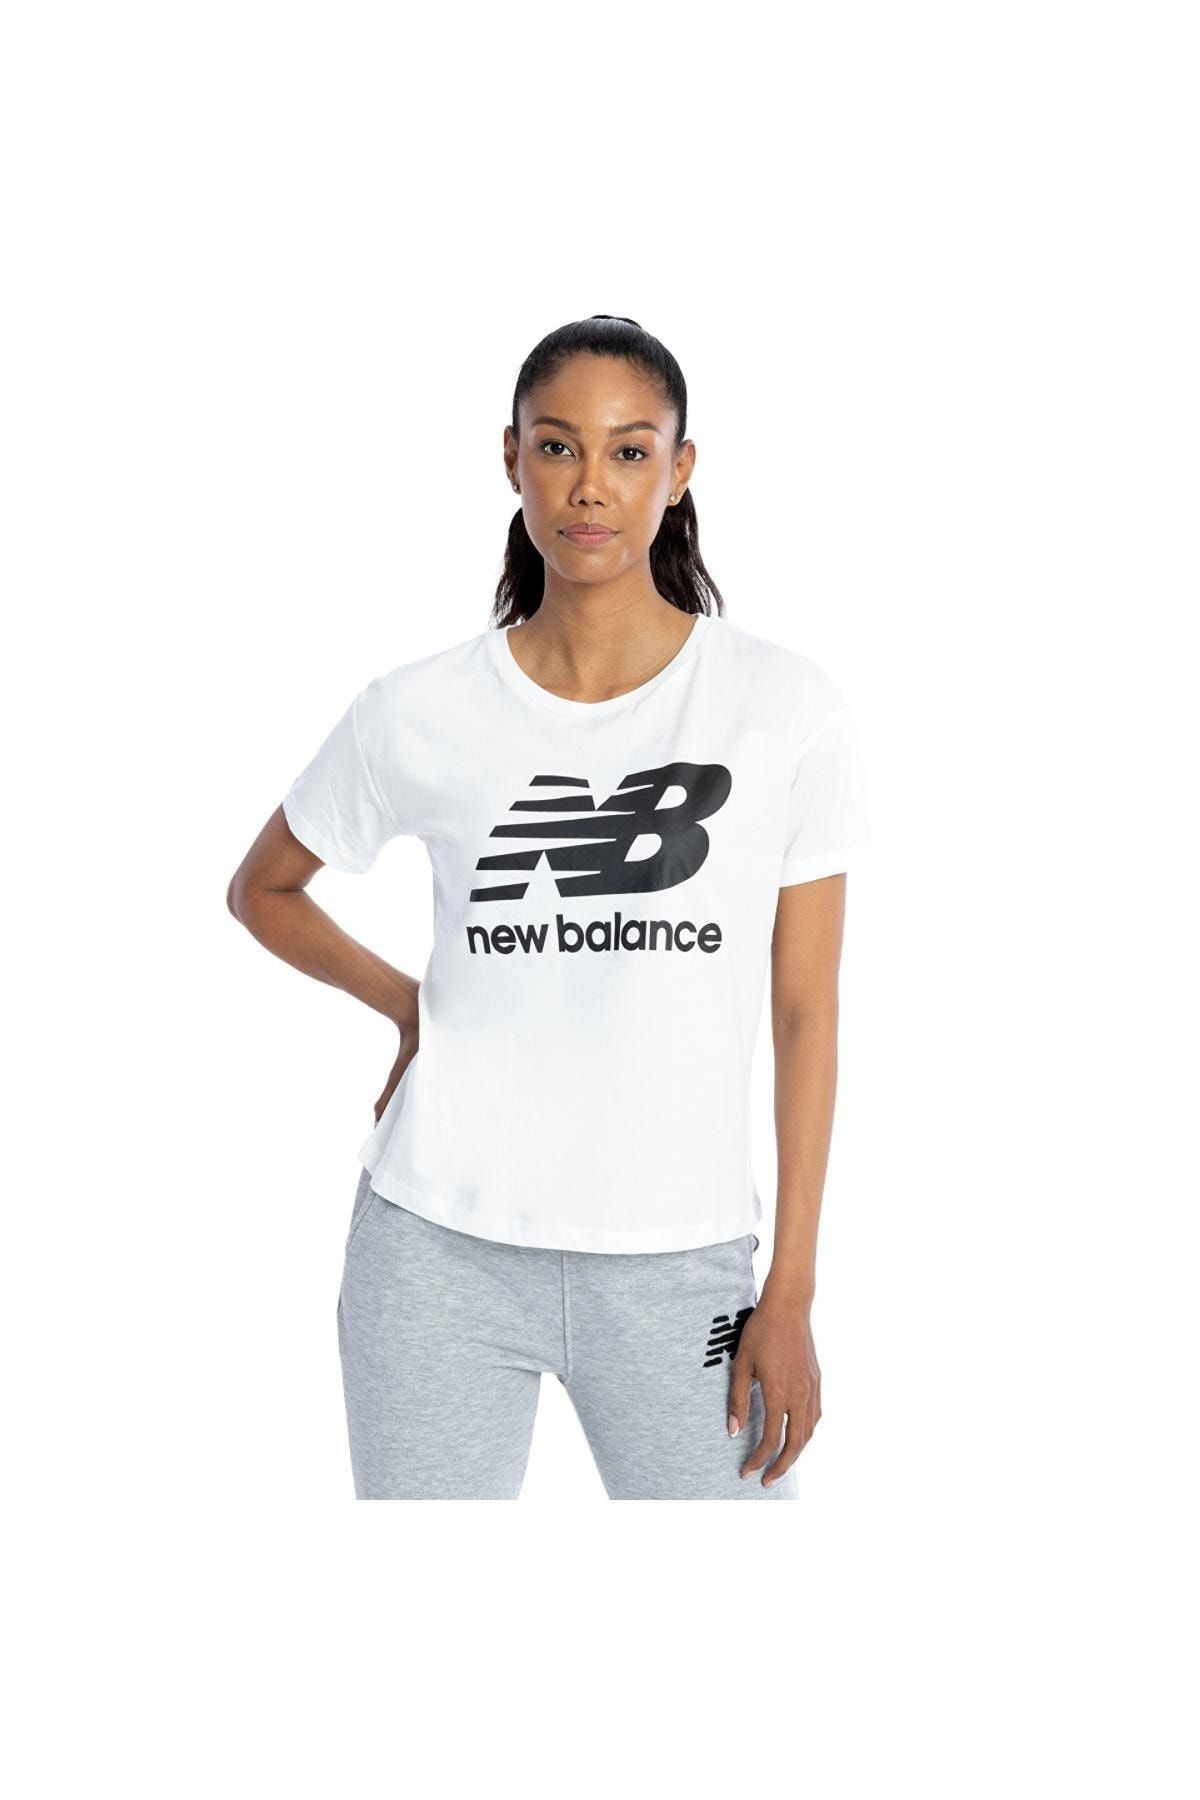 New Balance Wnt1203 Nb Womens Lifestyle Beyaz Kadın T-shirt